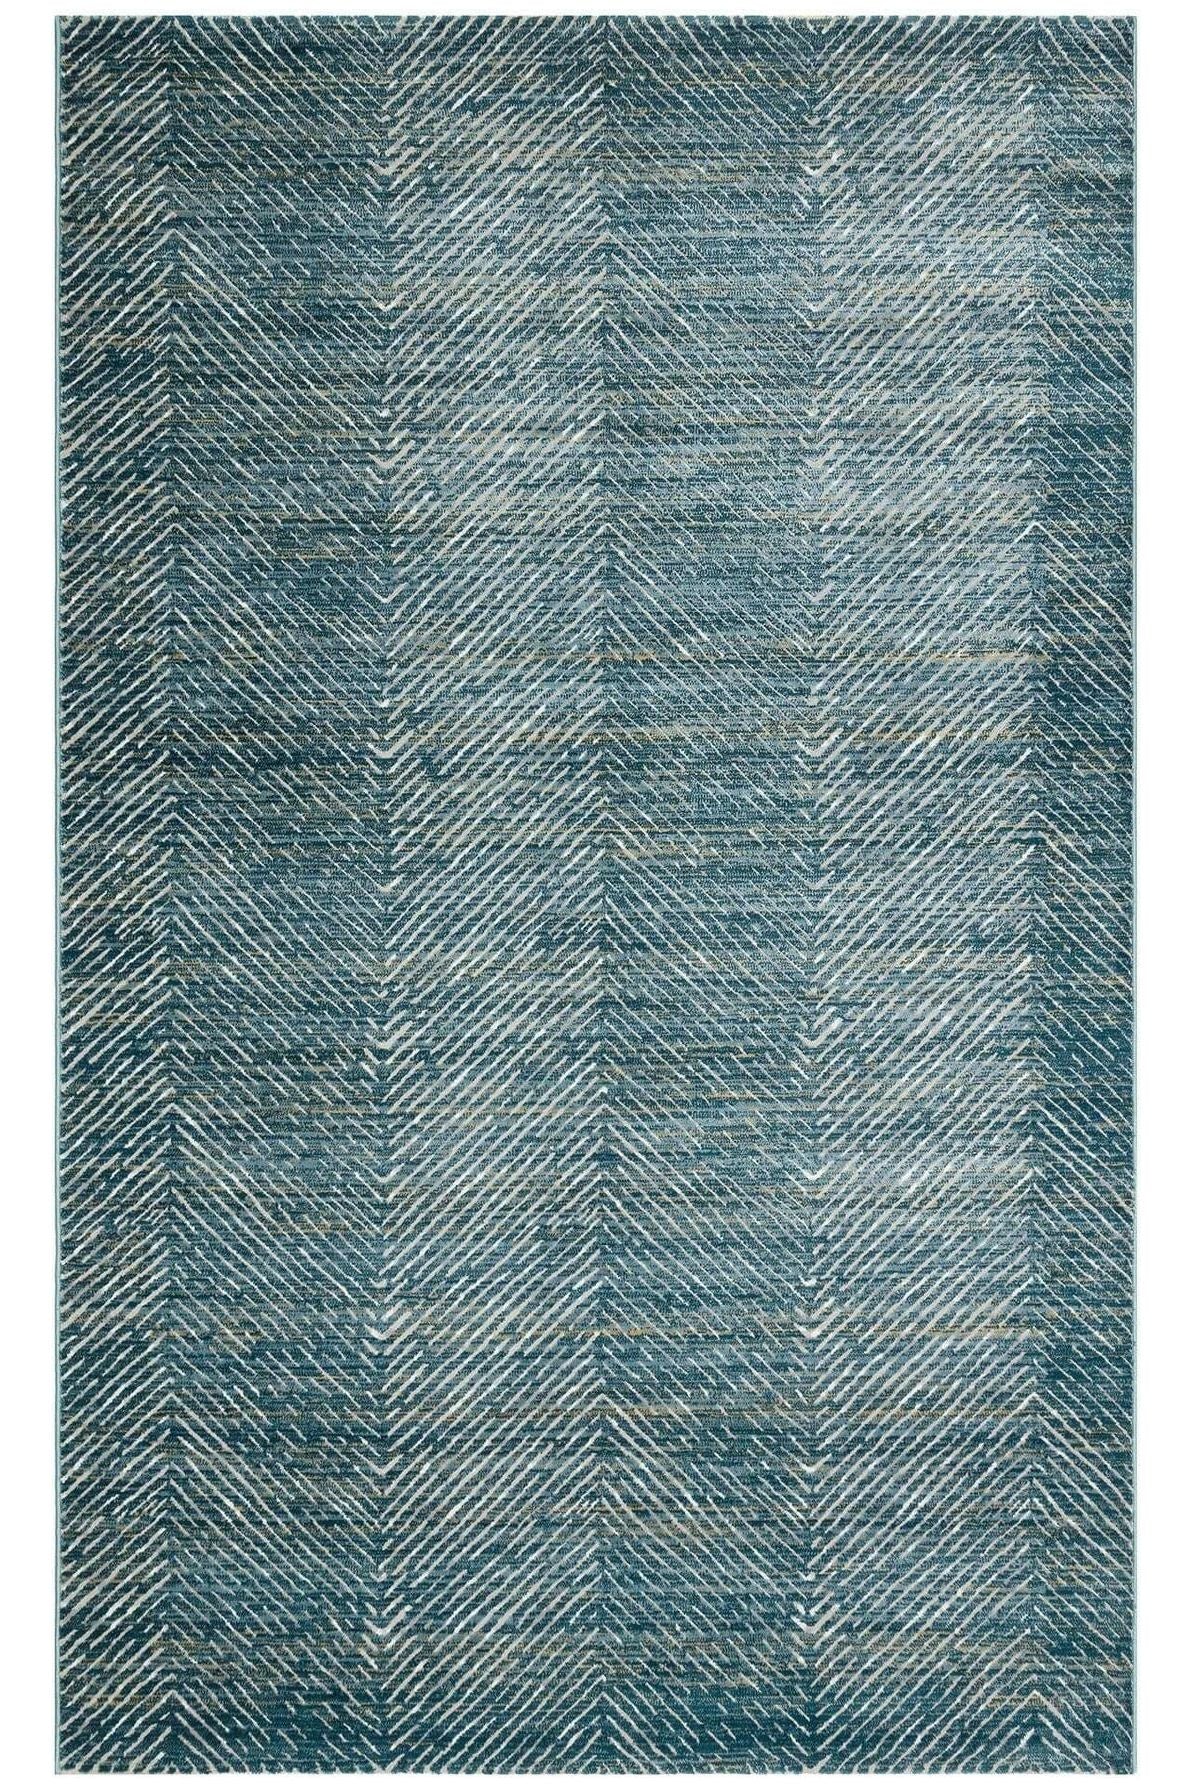 #Turkish_Carpets_Rugs# #Modern_Carpets# #Abrash_Carpets#Cm 18 Grey Marine